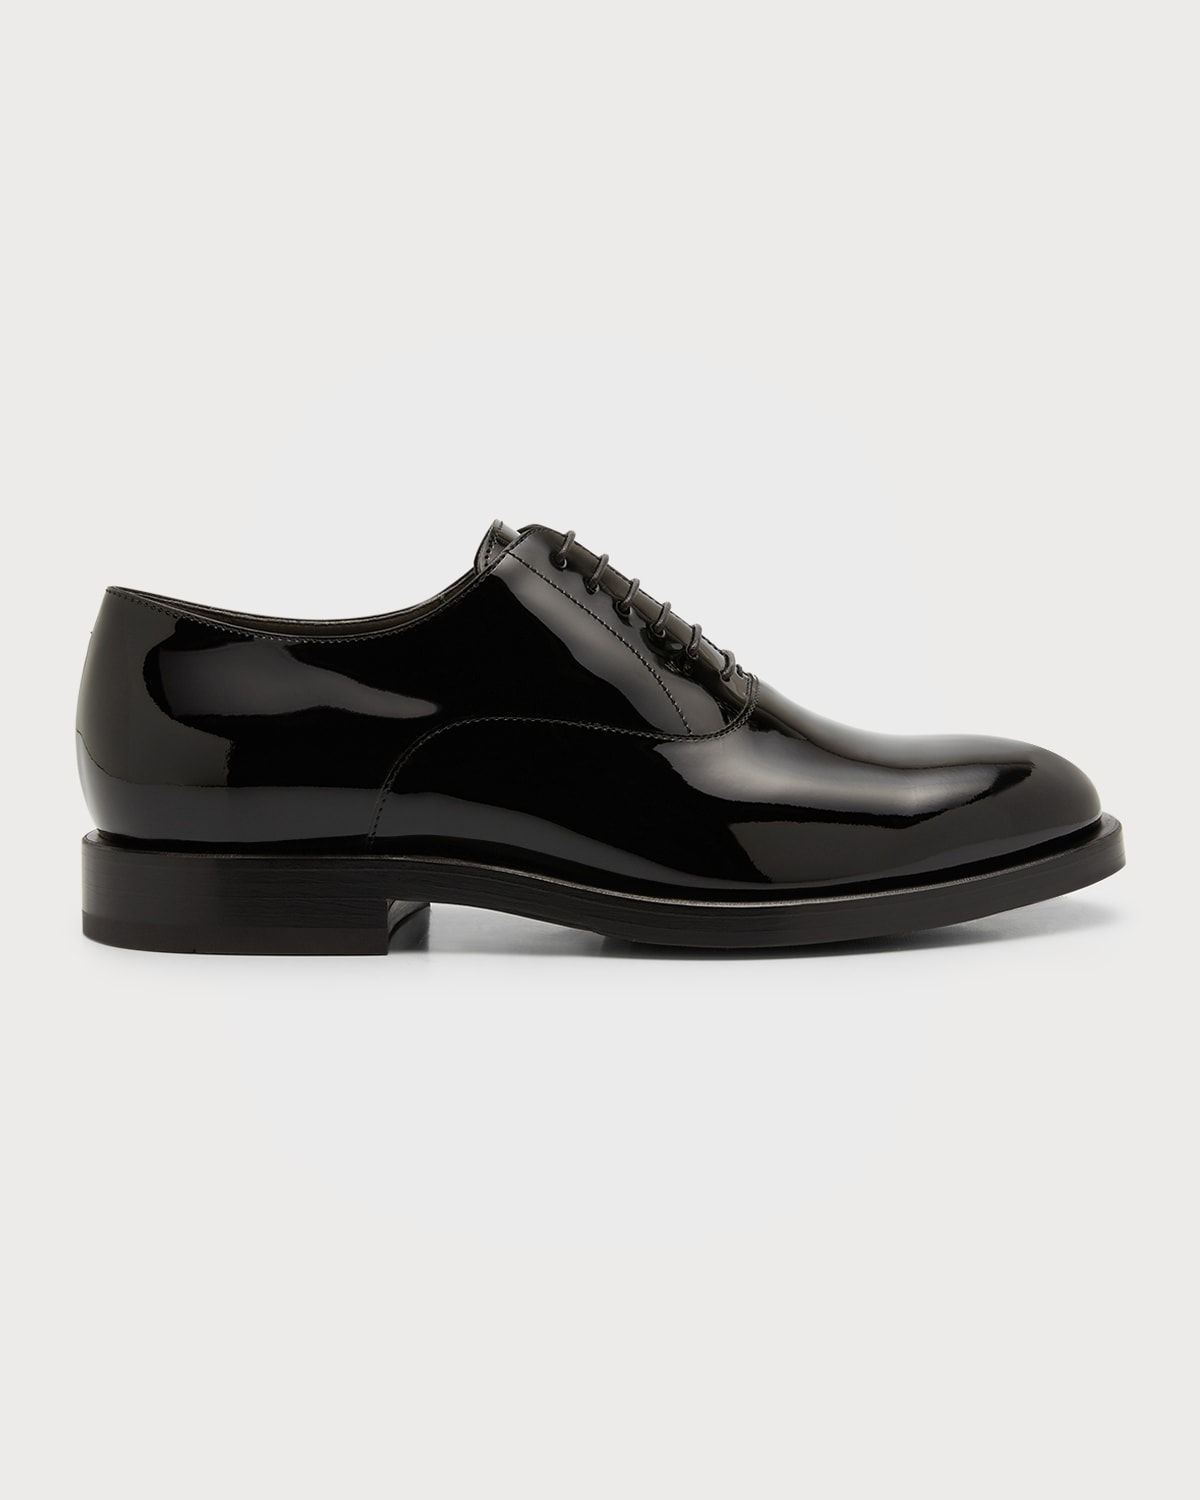 Brunello Cucinelli Men's Patent Leather Tuxedo Oxford Shoes In C101 Black